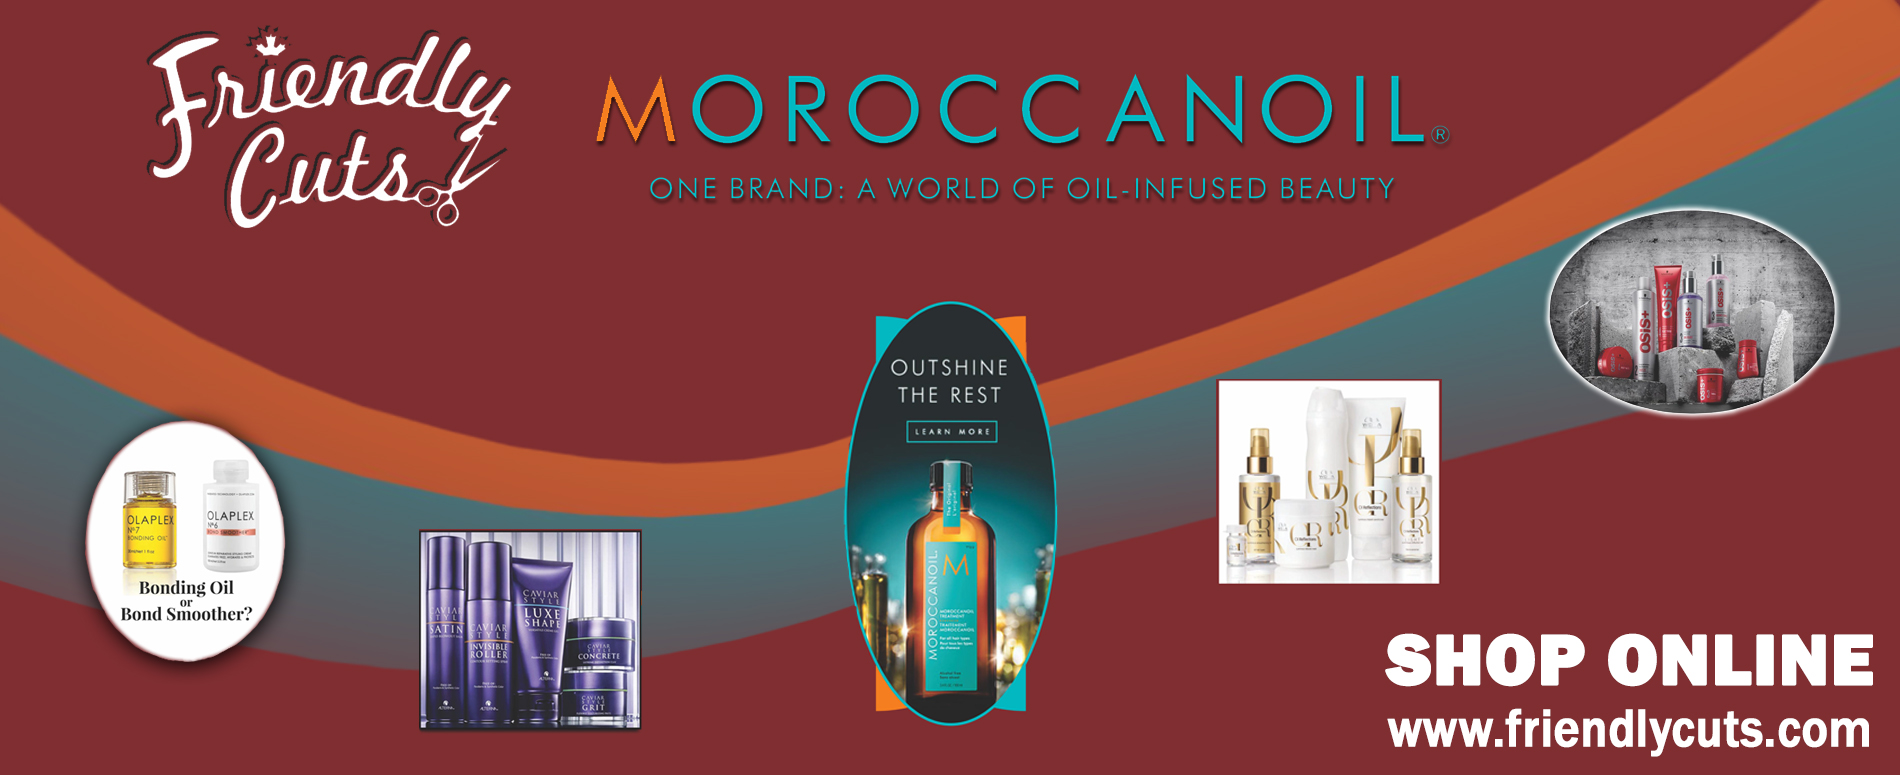 Moroccanoil at Friendly Cuts